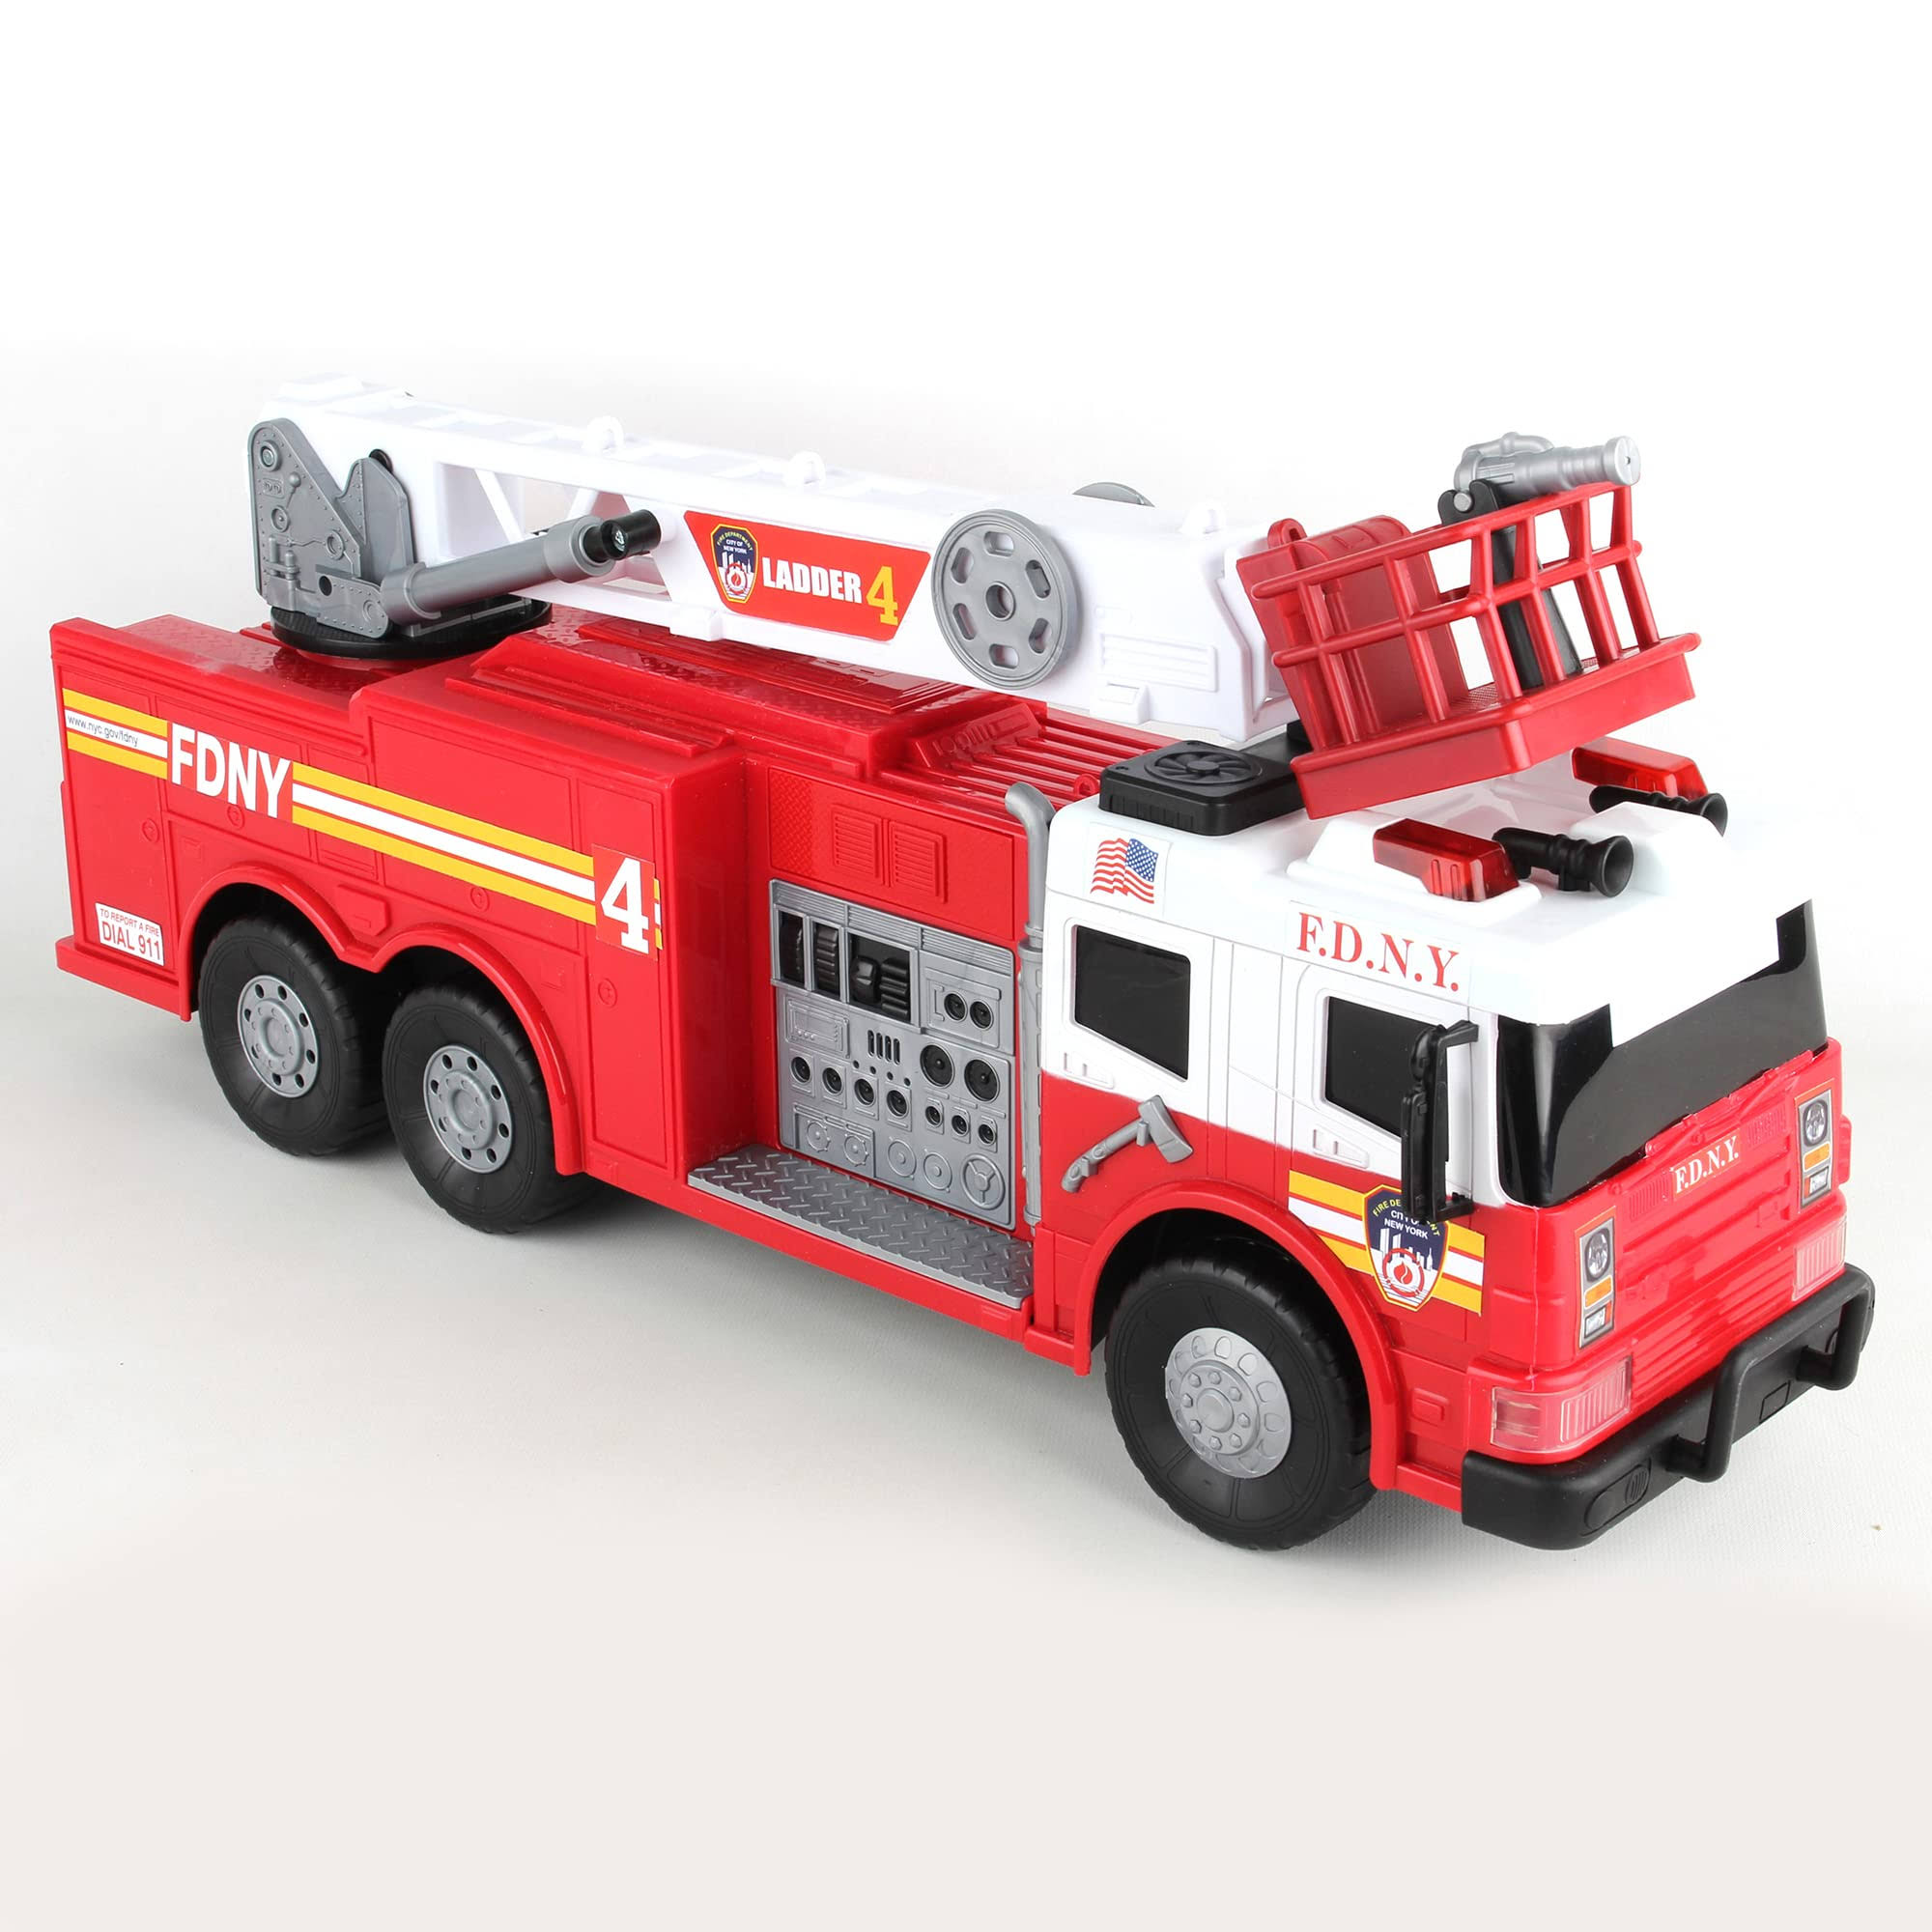 Daron FDNY 24 Fire Truck W Lights Sounds